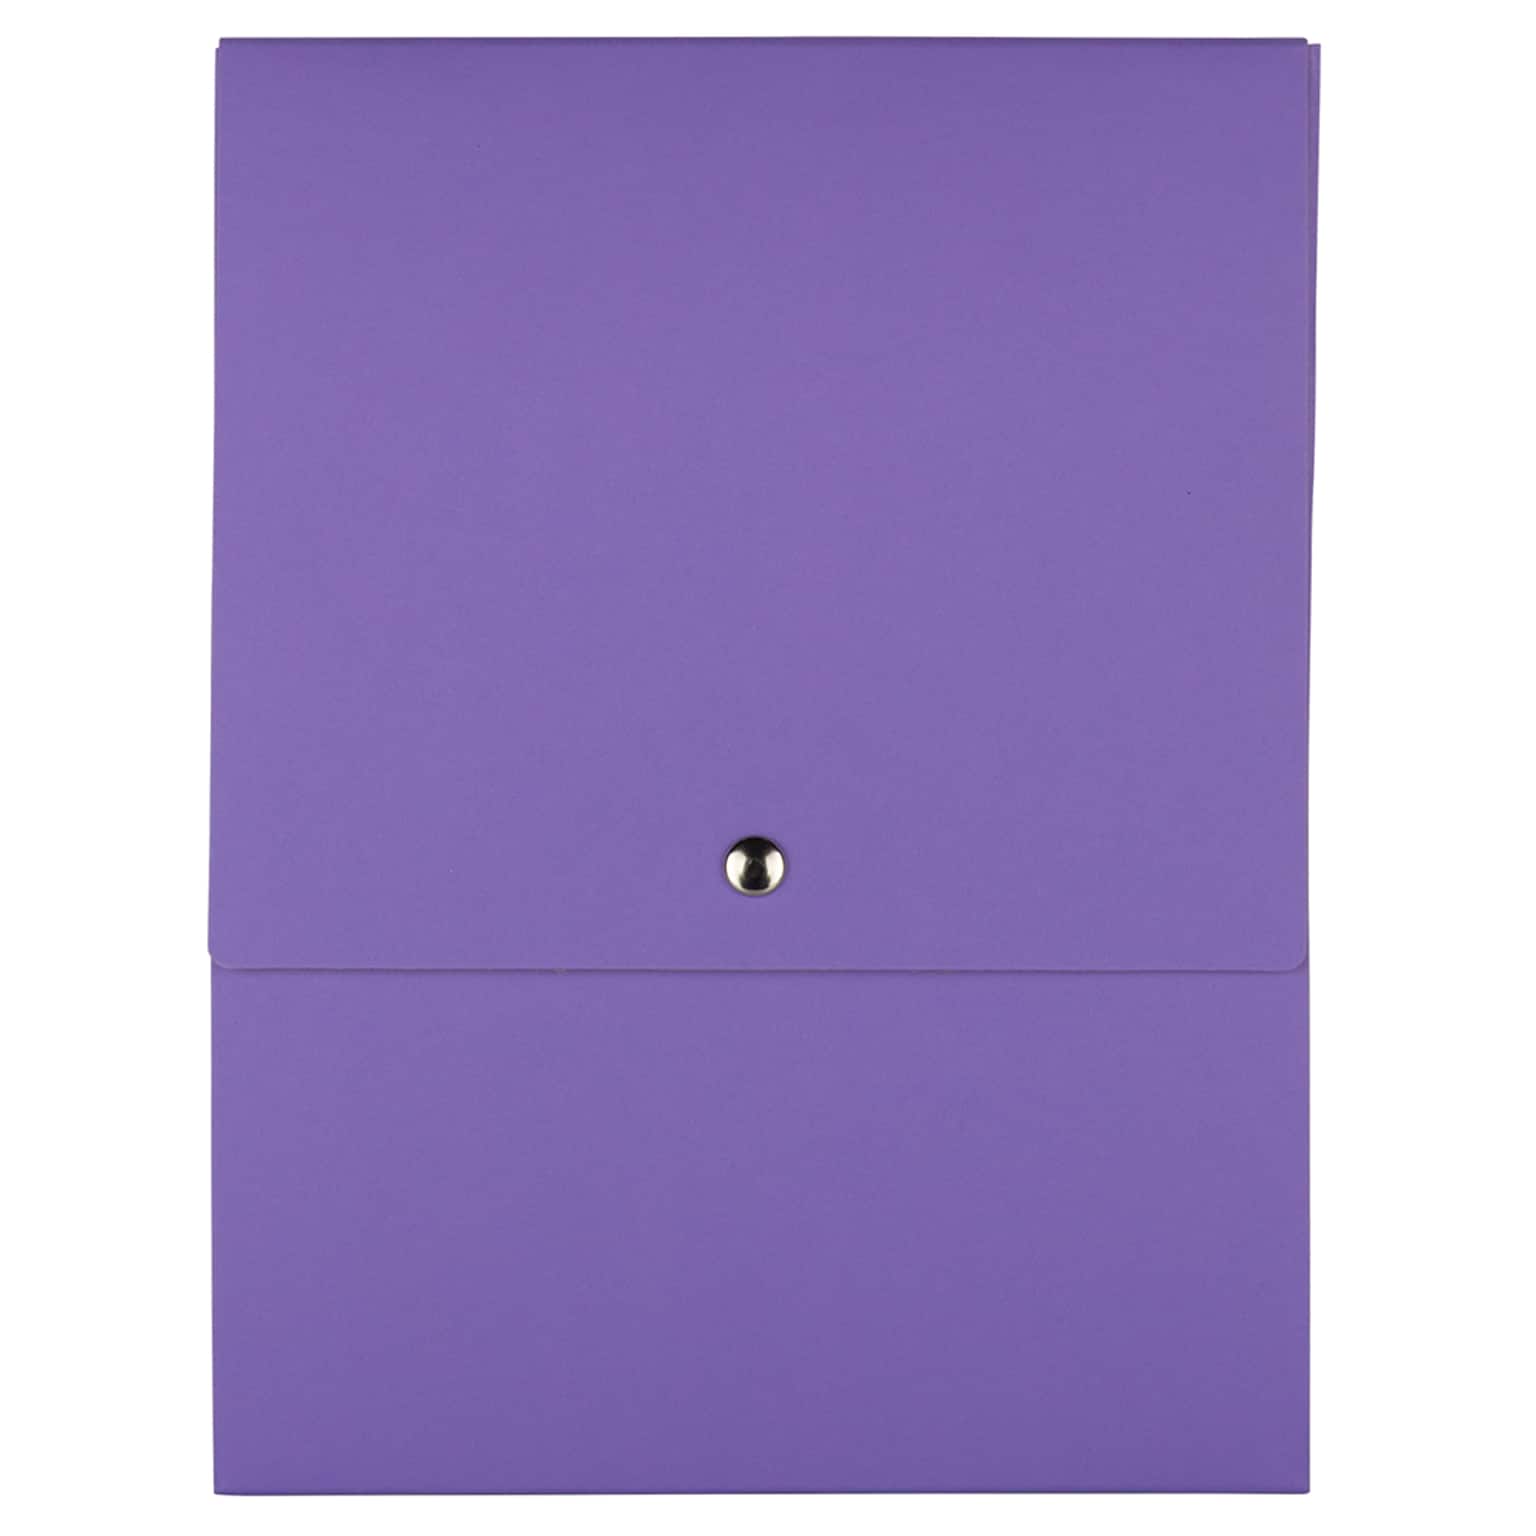 JAM PAPER Vertical Snap Closure Portfolio, 12 1/8 x 9 x 1/2, Purple Kraft (90335342)